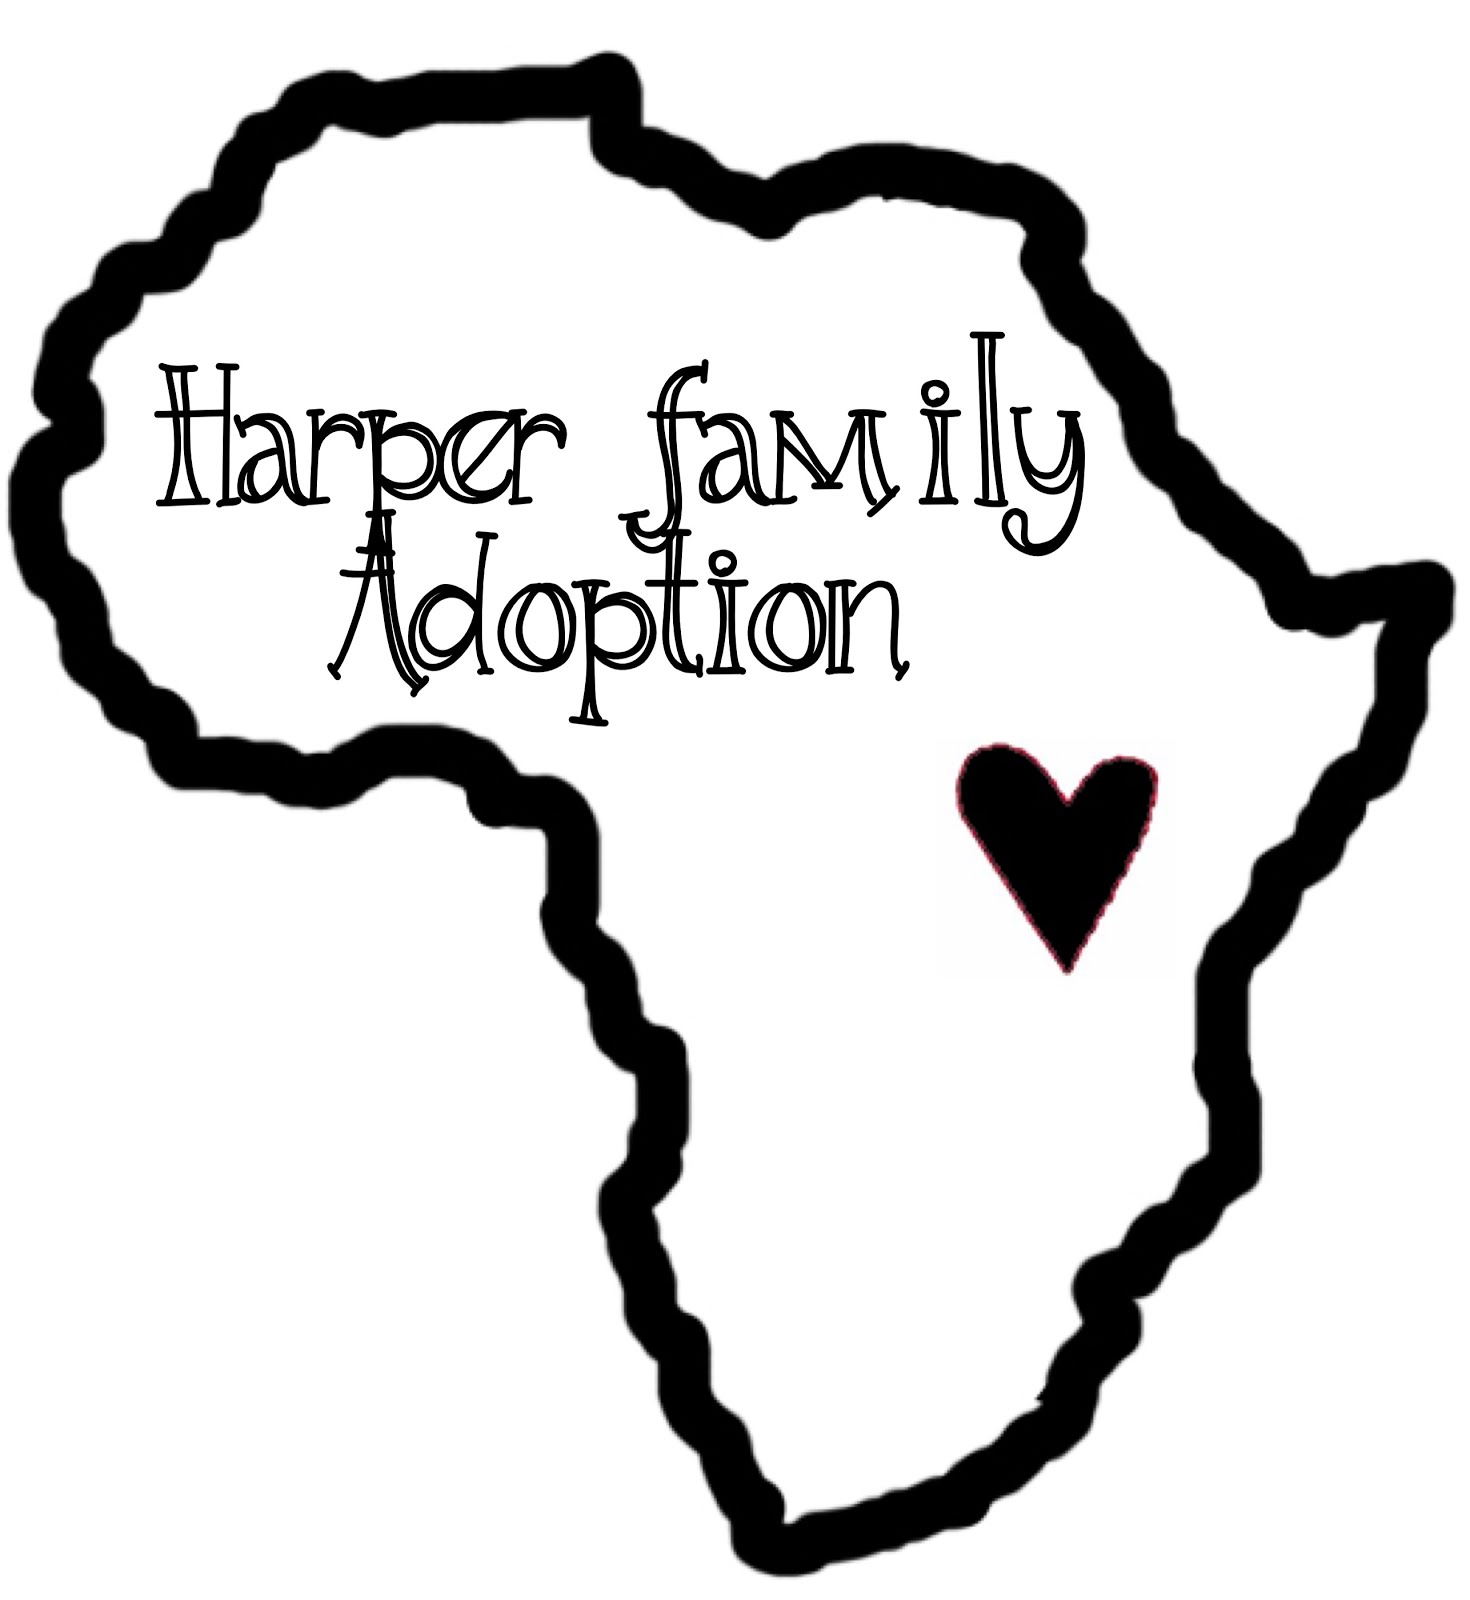 Adoption Donations